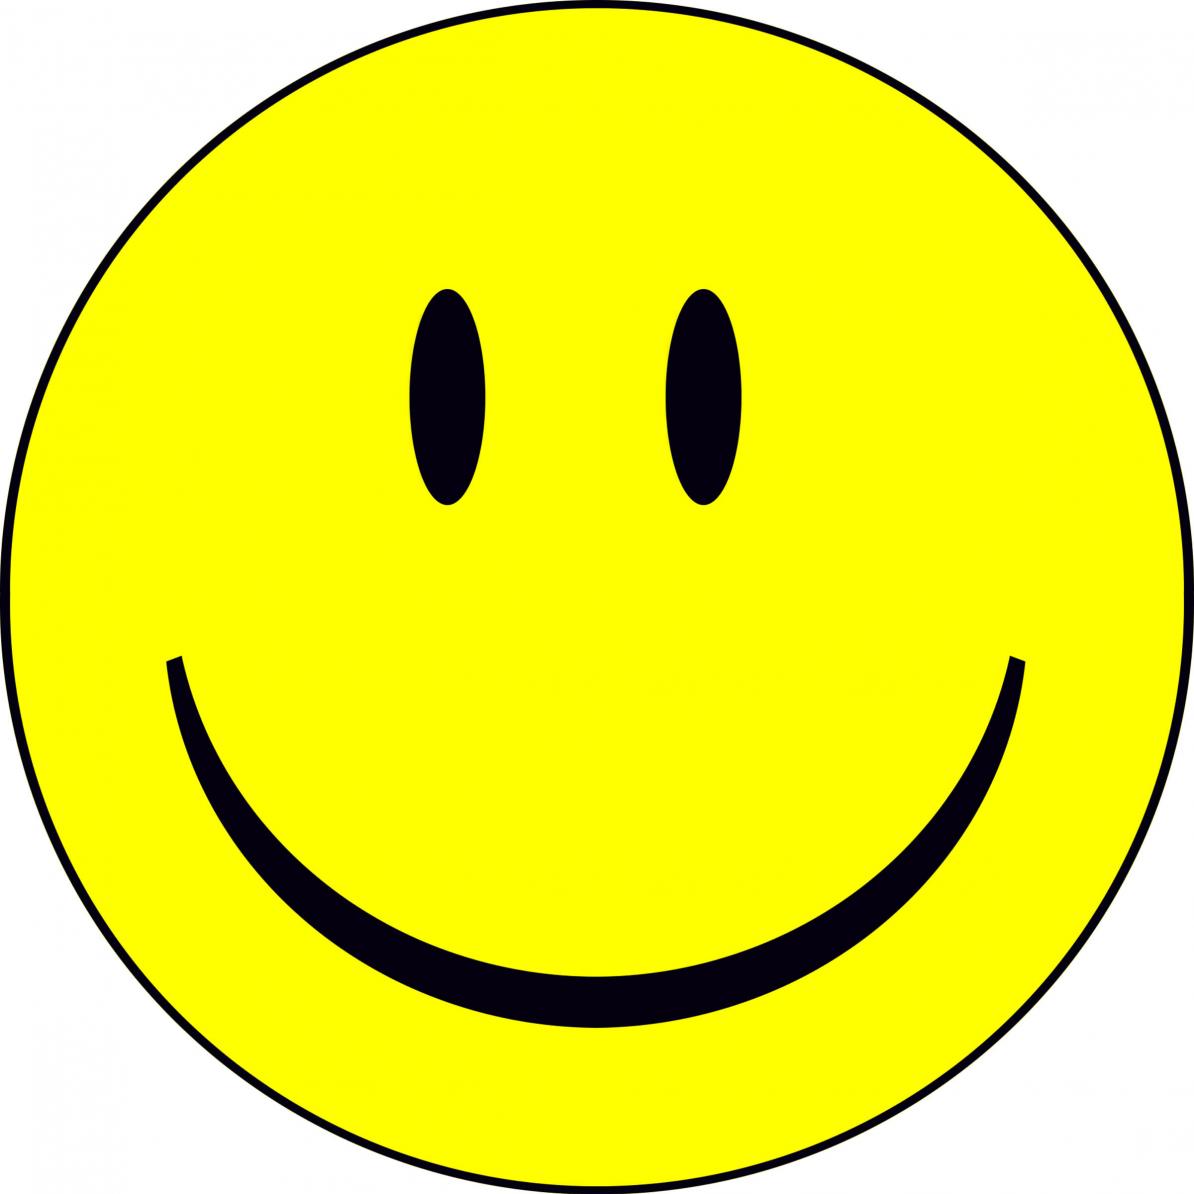  Smiley Face Clip Art | Smile Day Site ...